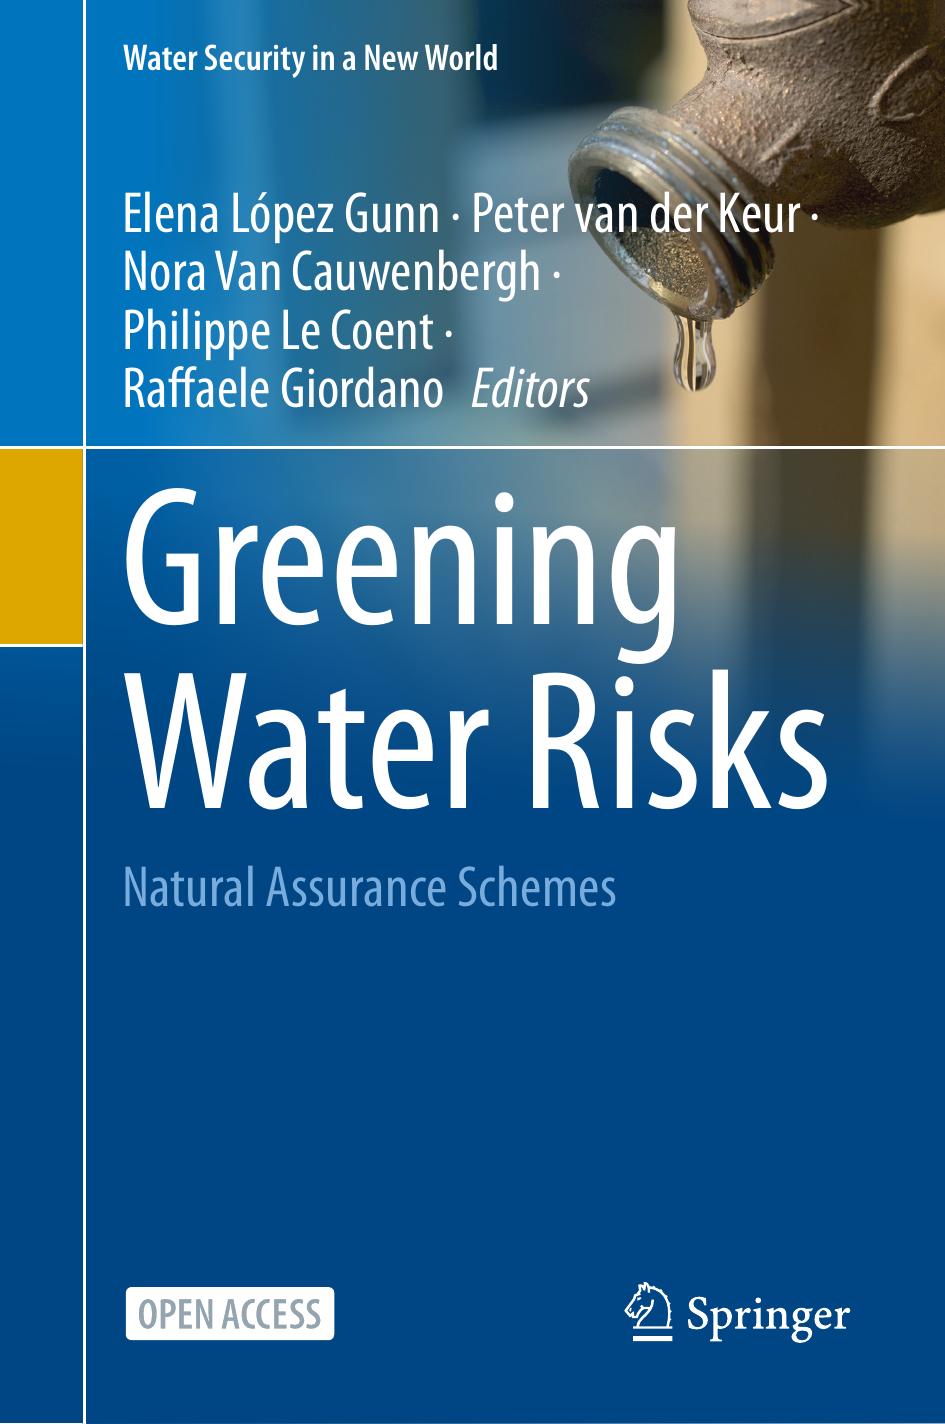 Greening Water Risks: Natural Assurance Schemes by Elena López-Gunn Peter van der Keur Nora Van Cauwenbergh Philippe Le Coent Raffaele Giordano